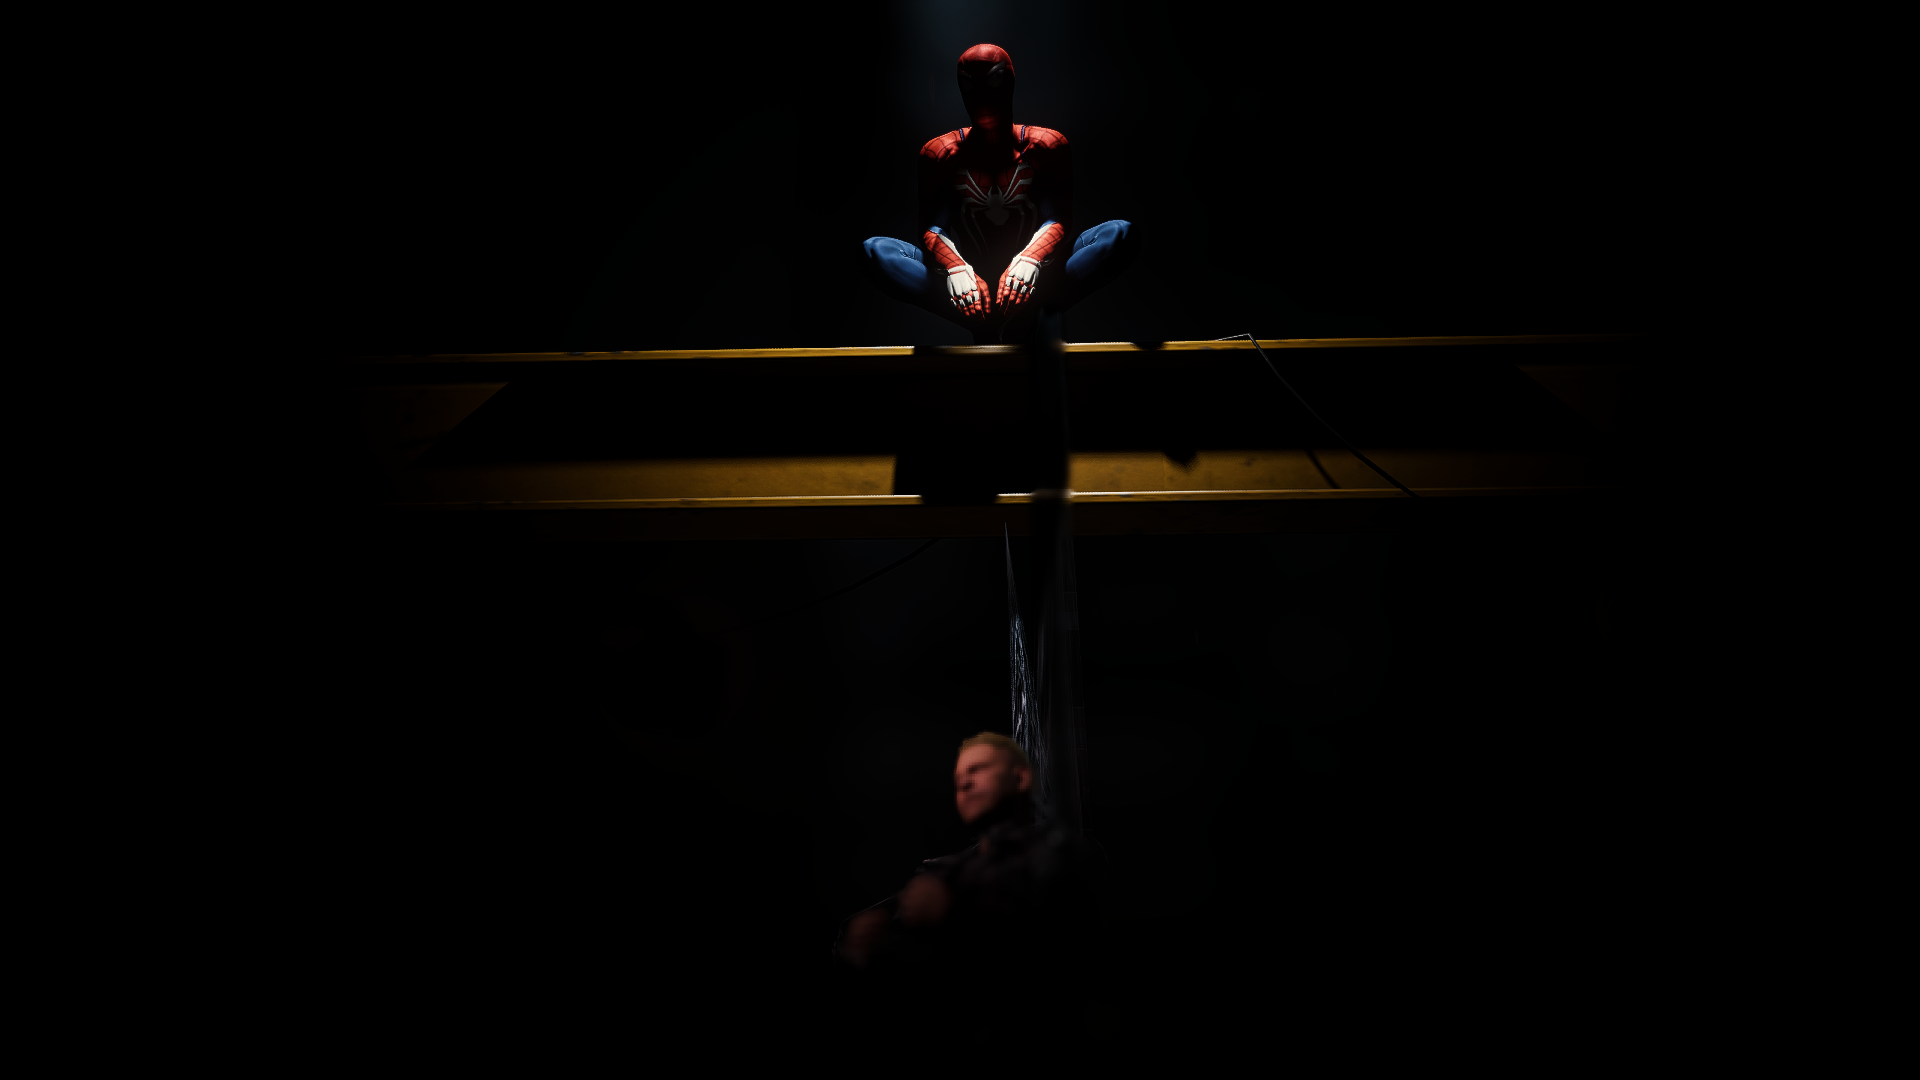 General 1920x1080 Spider-Man Spider-Man 3 (Game) night squatting superhero CGI